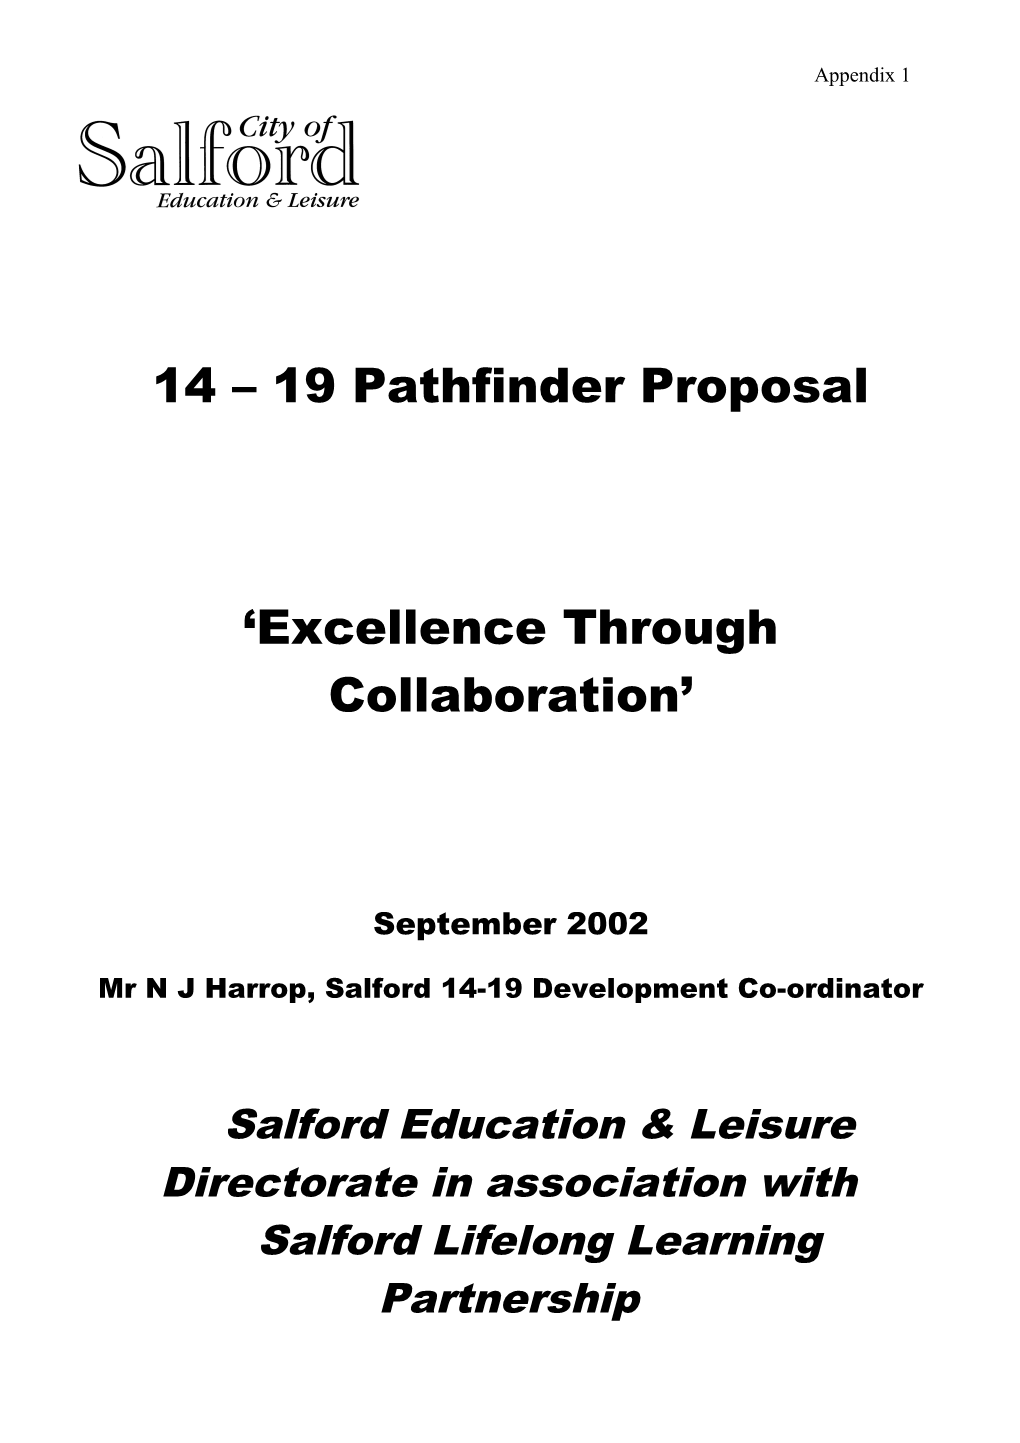 Mr N J Harrop, Salford 14-19 Development Co-Ordinator